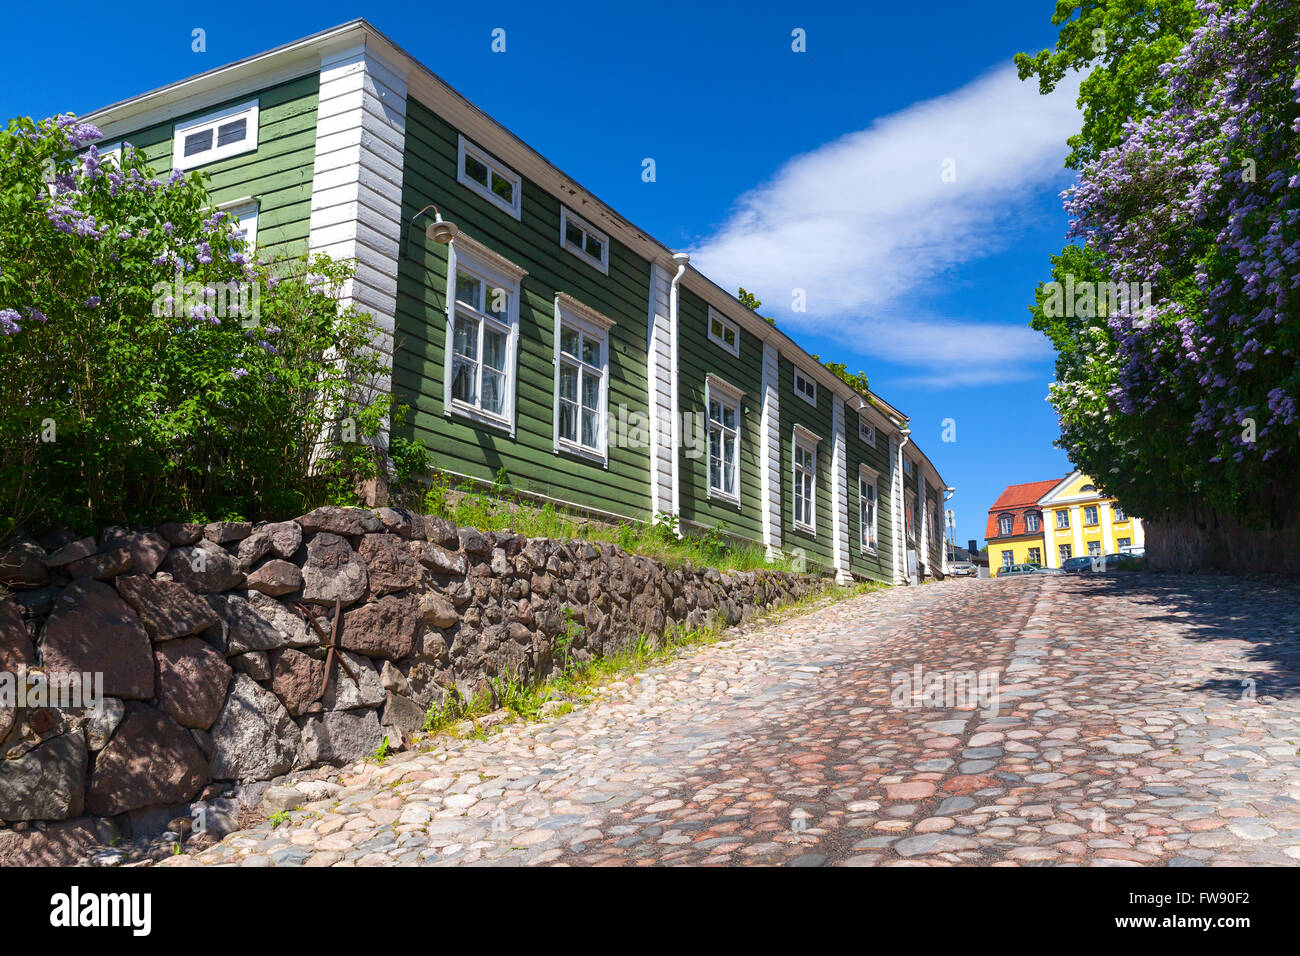 Porvoo, Finnland - 12. Juni 2015: Streetview historische finnische Stadt Porvoo, Fassaden aus Holz Wohnhäuser Stockfoto